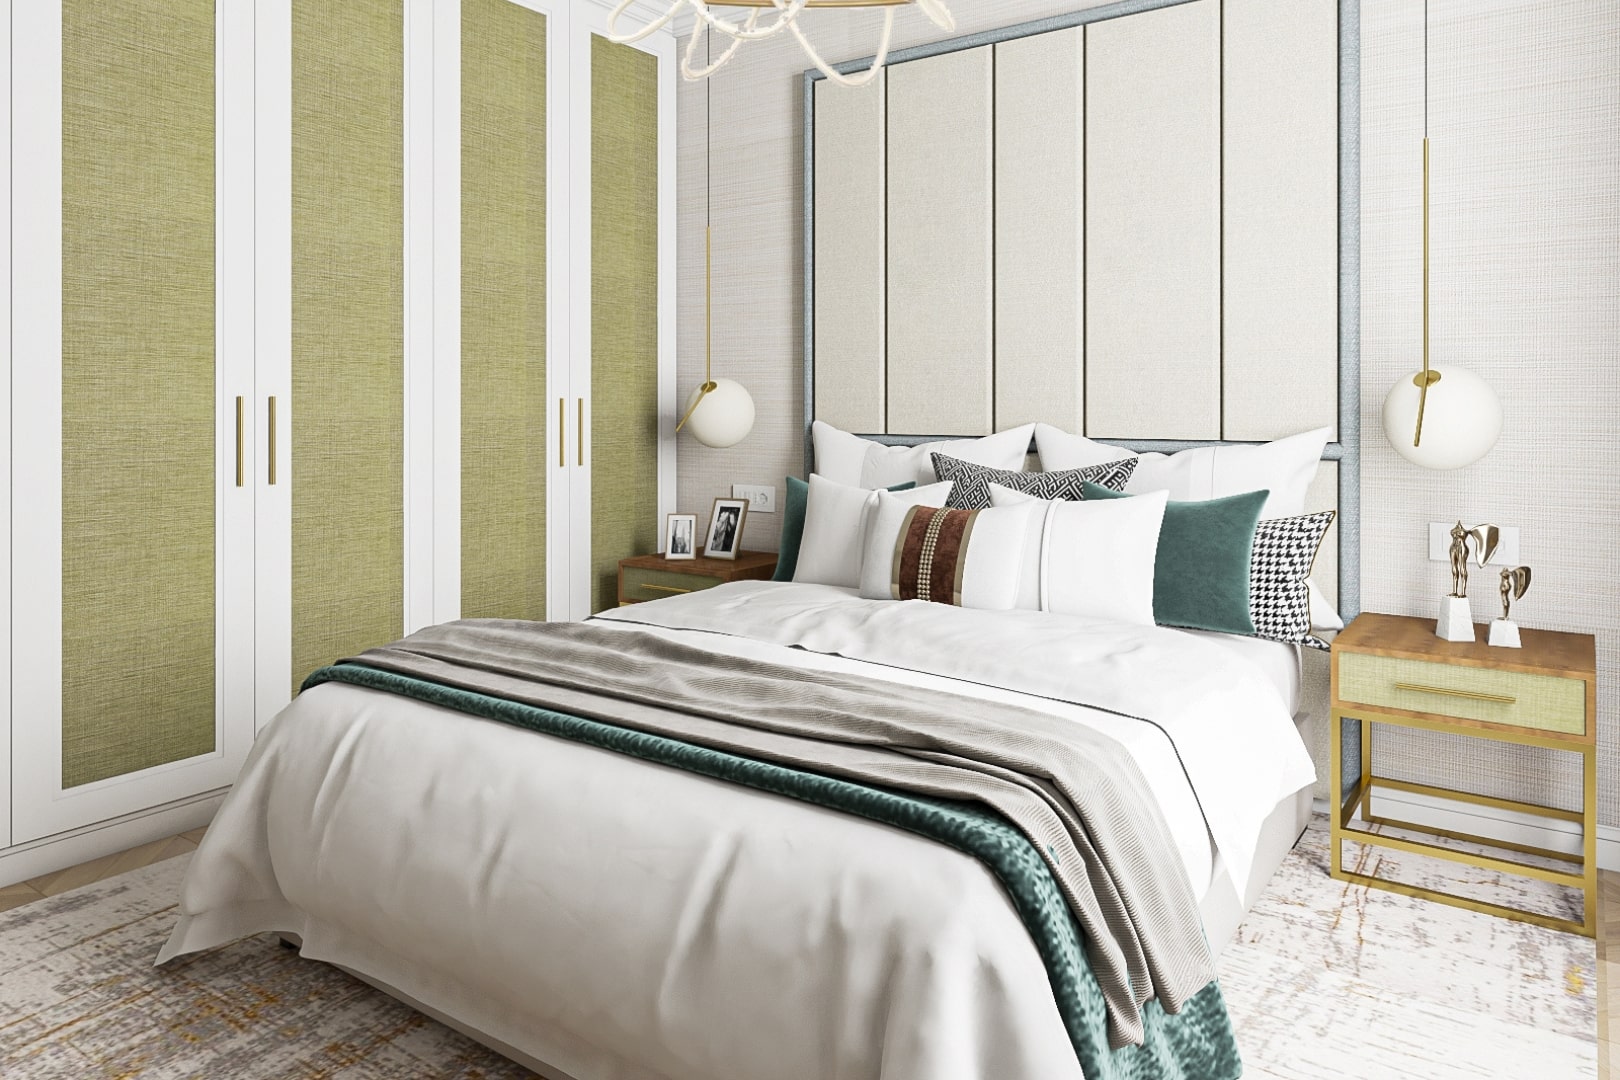 Dormitor amenajat in stil modern, culorile naturale completand perfect intregul design al camerei.